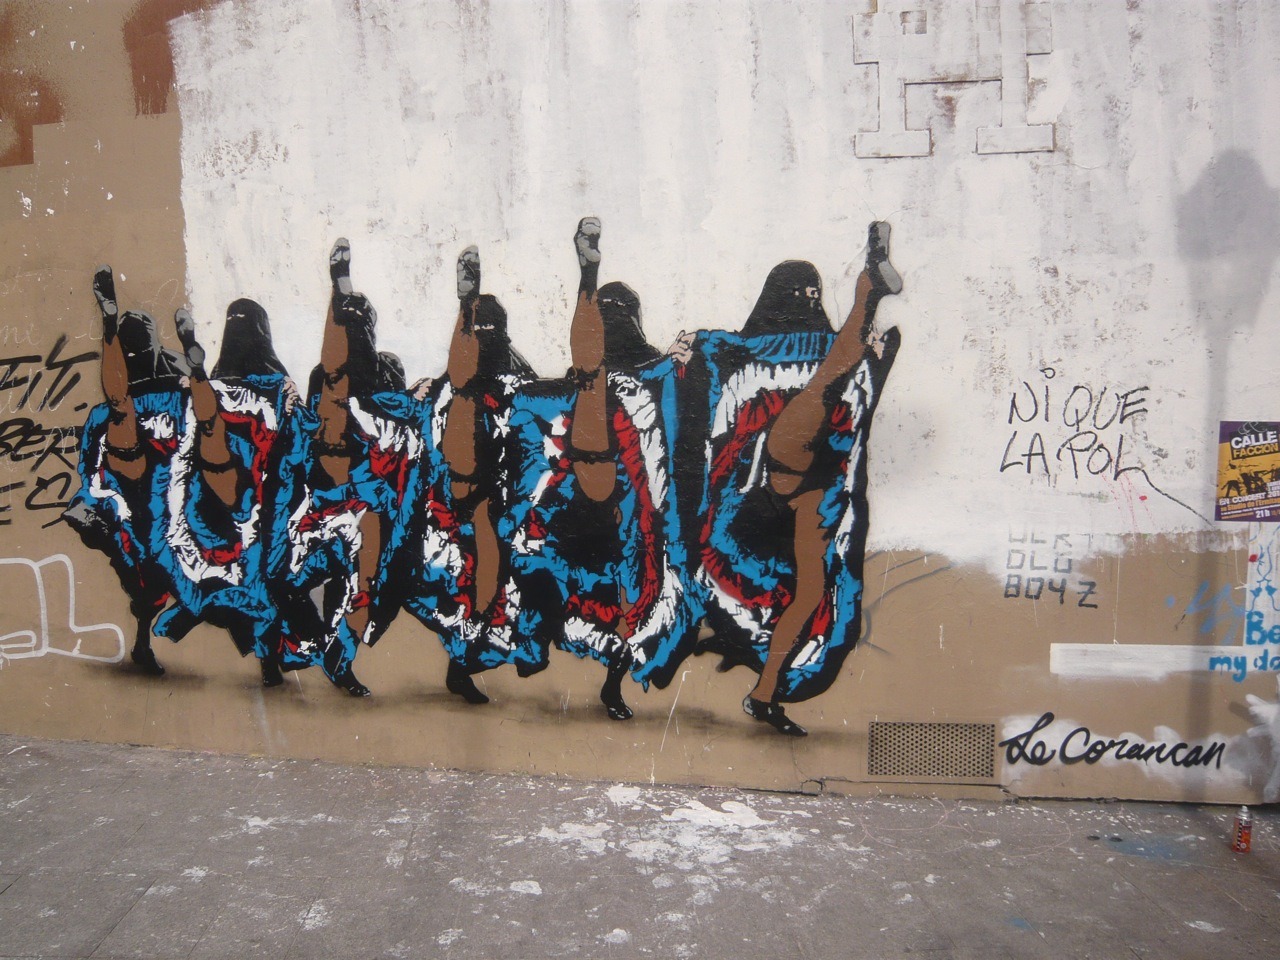 Nick Walker. British artist spray painting controversial stuff on walls in Paris.